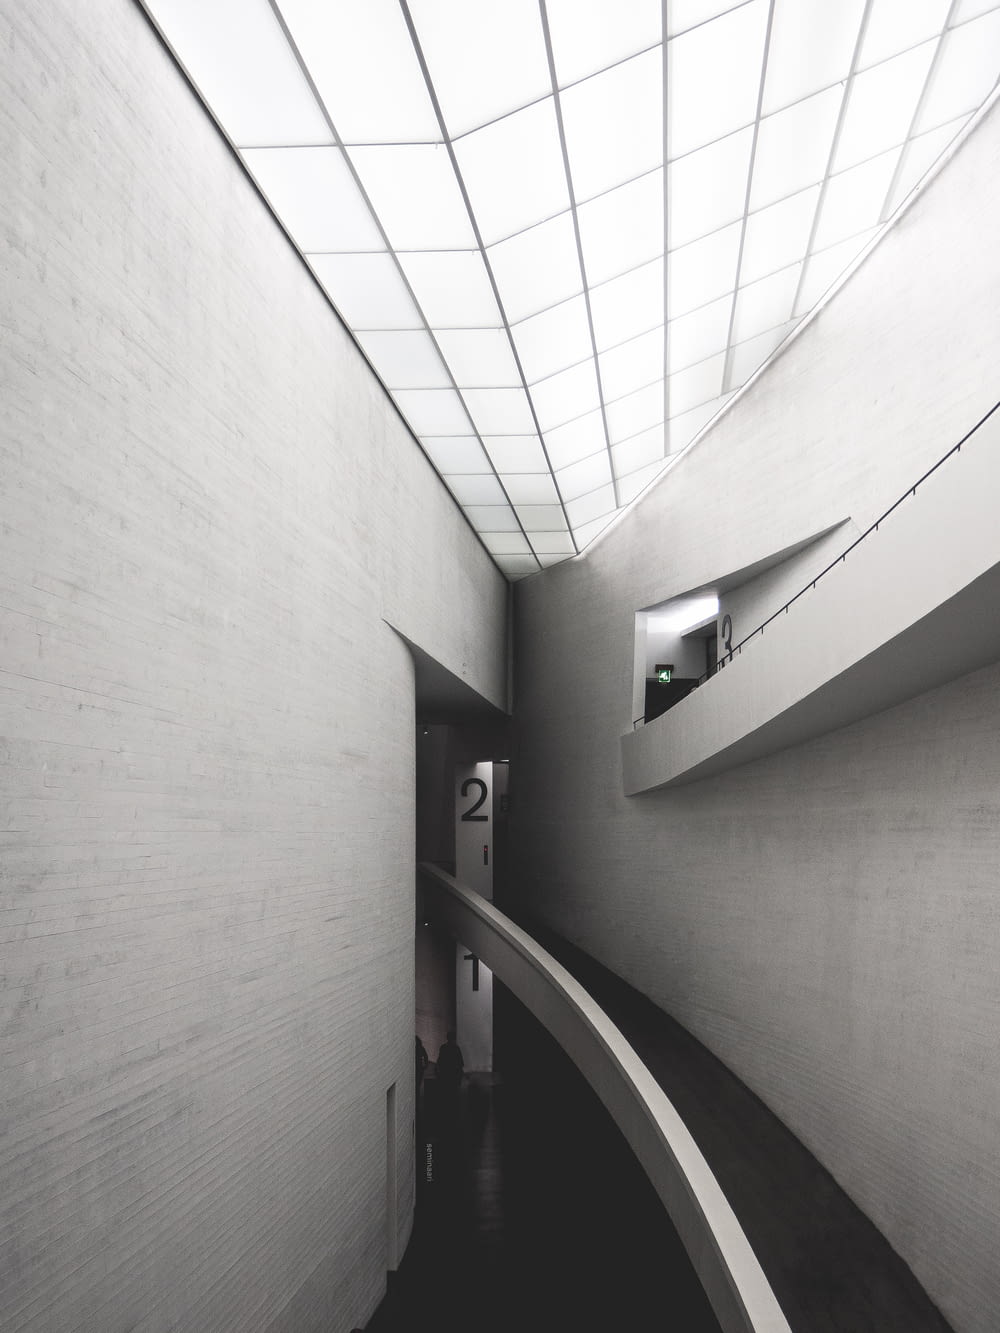 grayscale photo of empty hallway